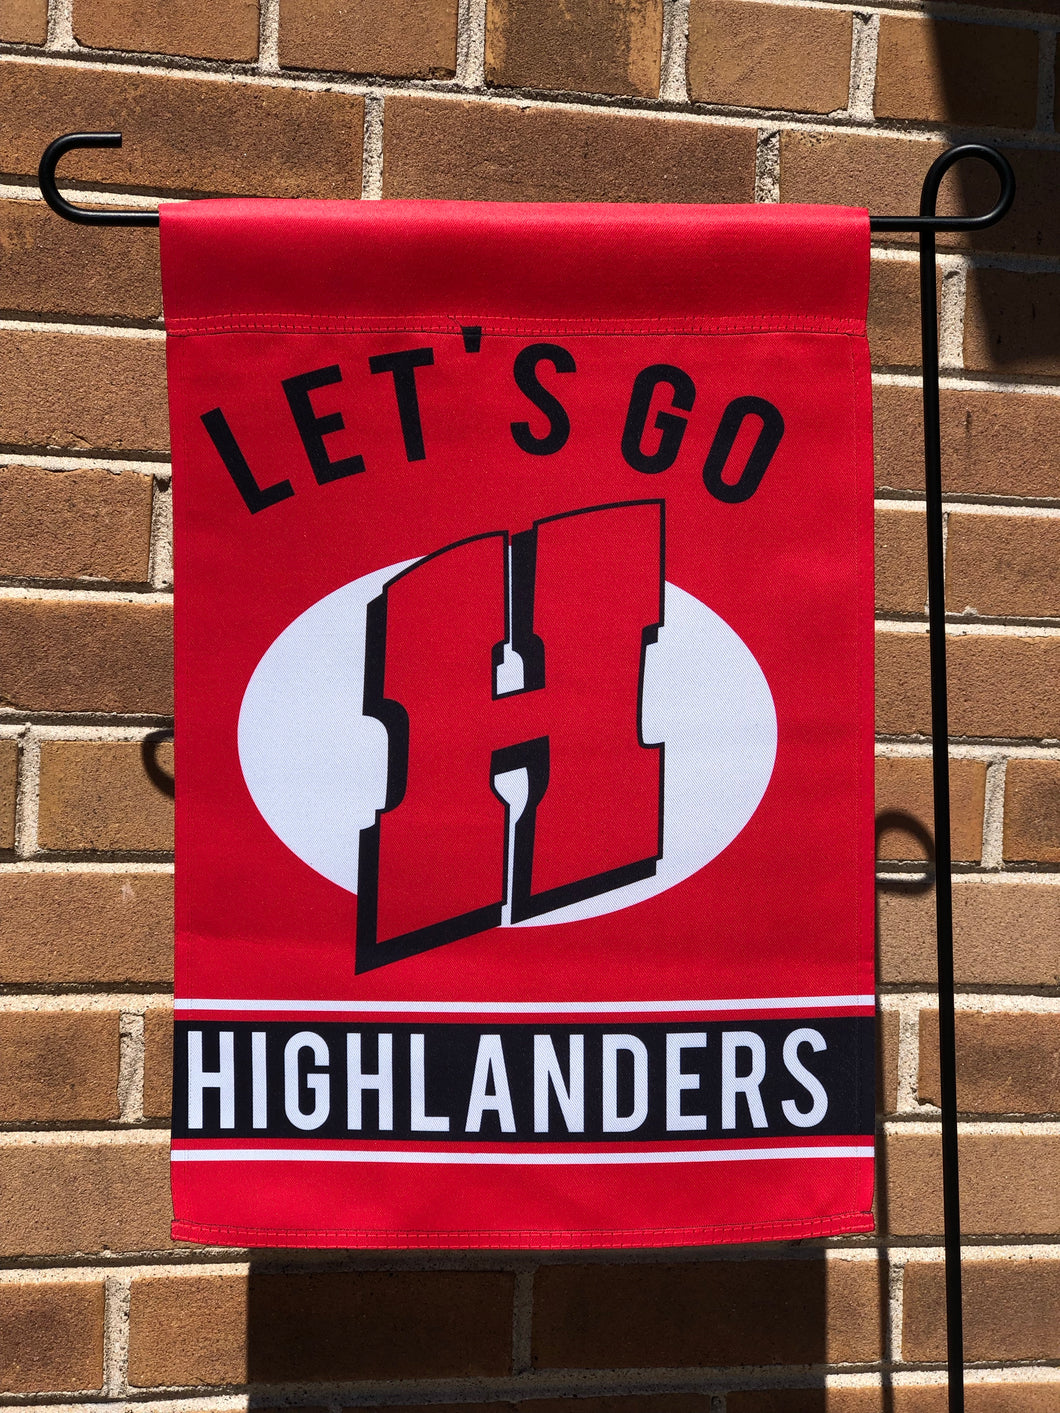 Homestead “Let's Go Highlanders